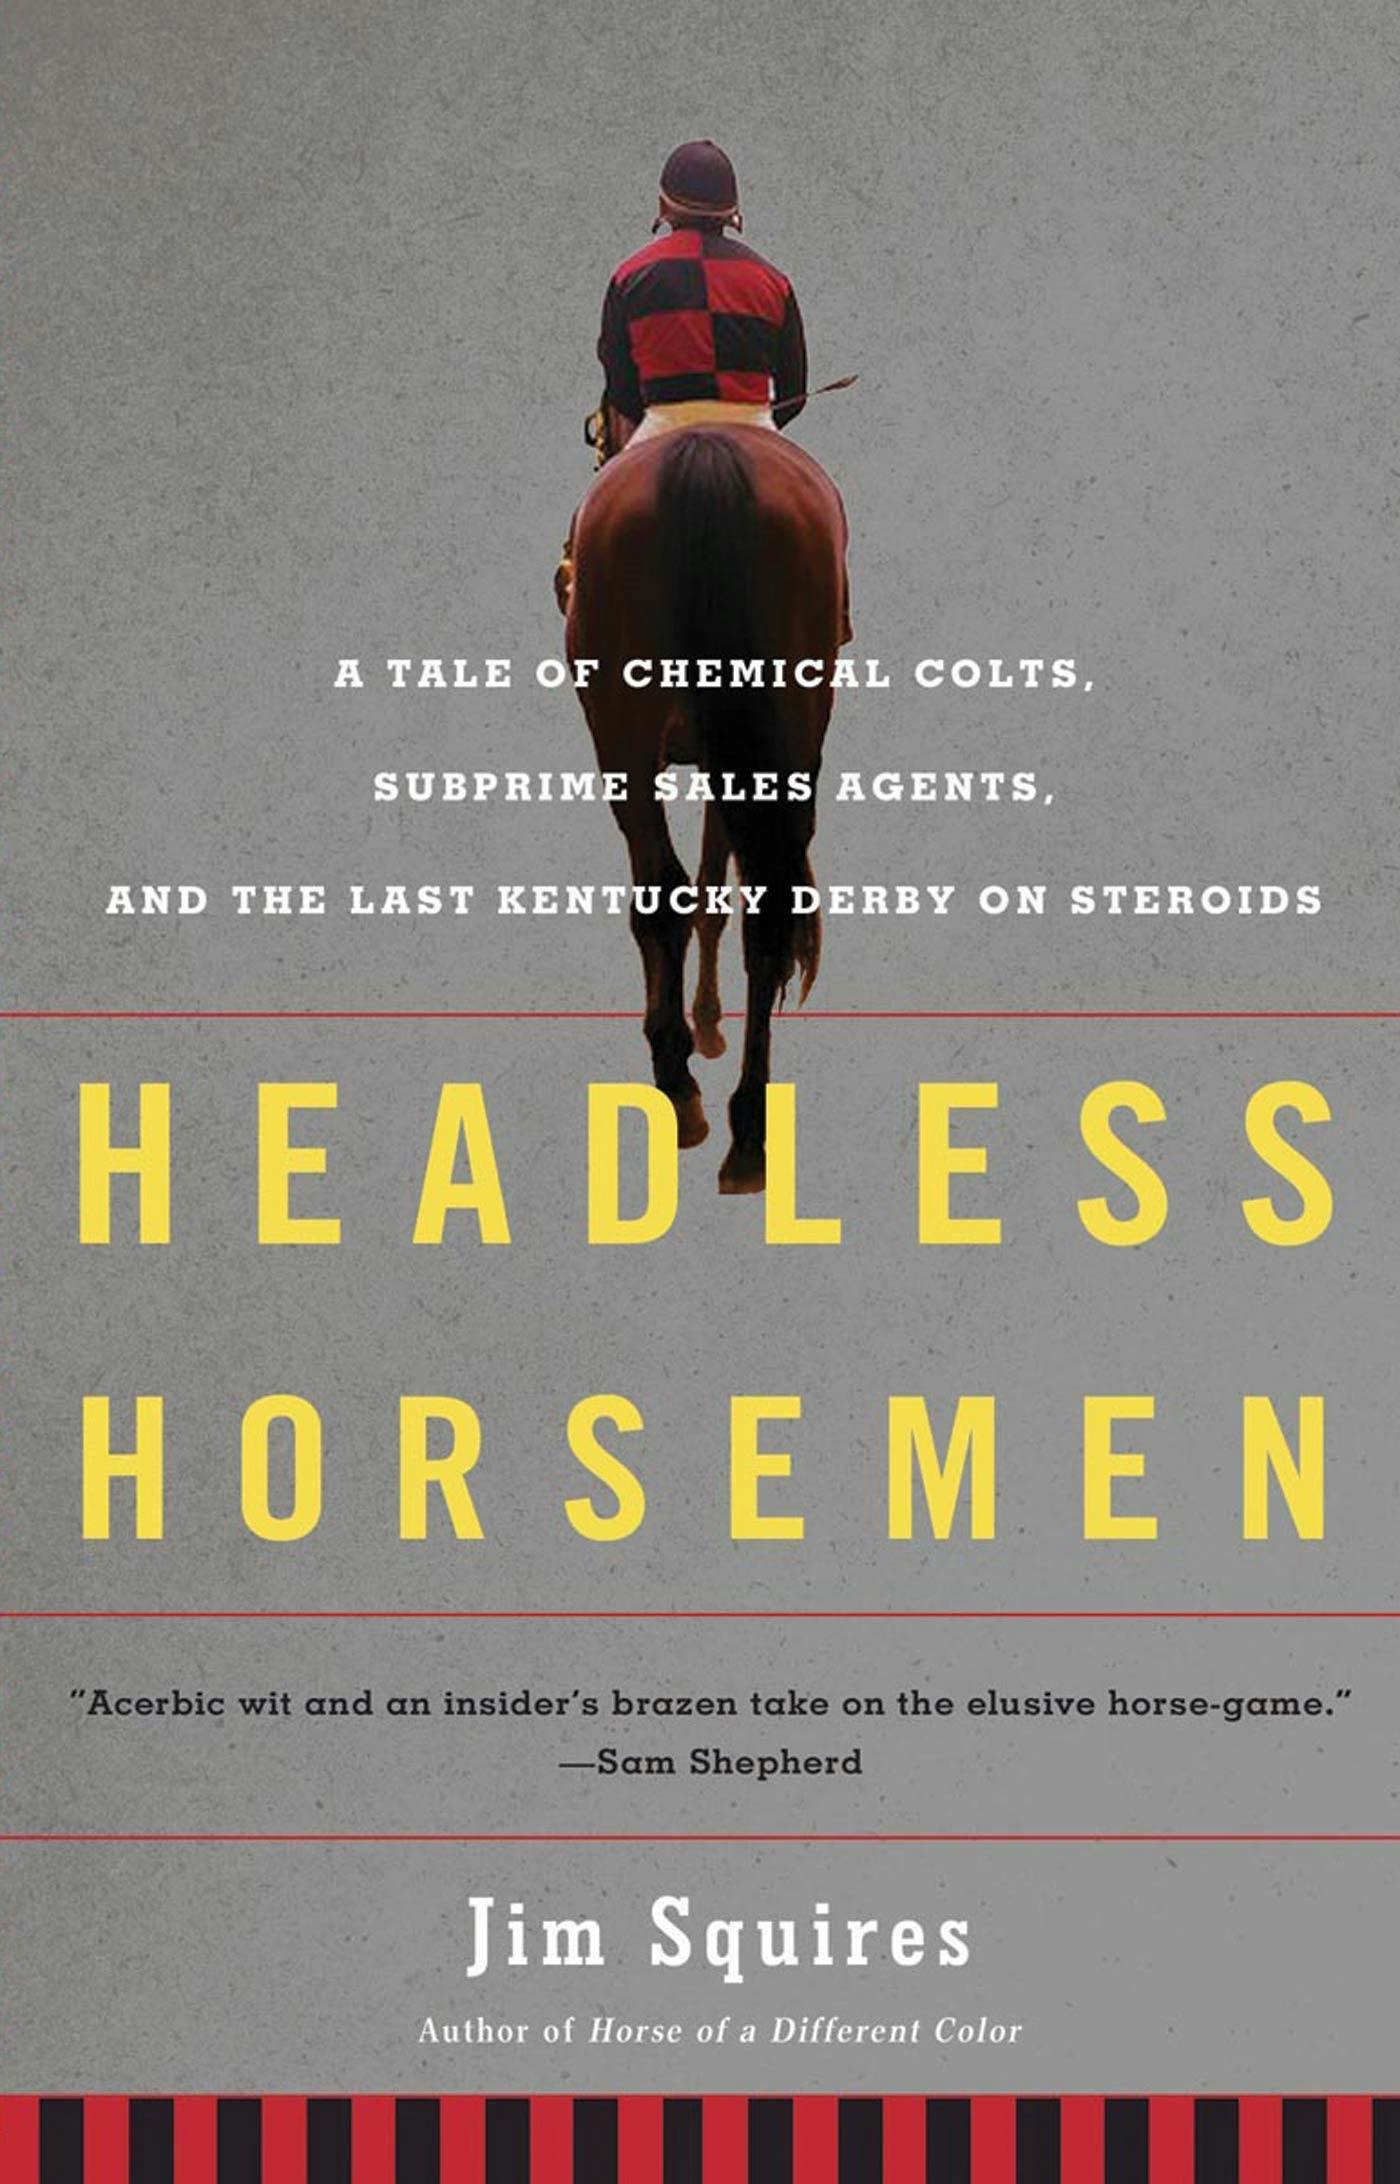 Headless Horsemen pic picture